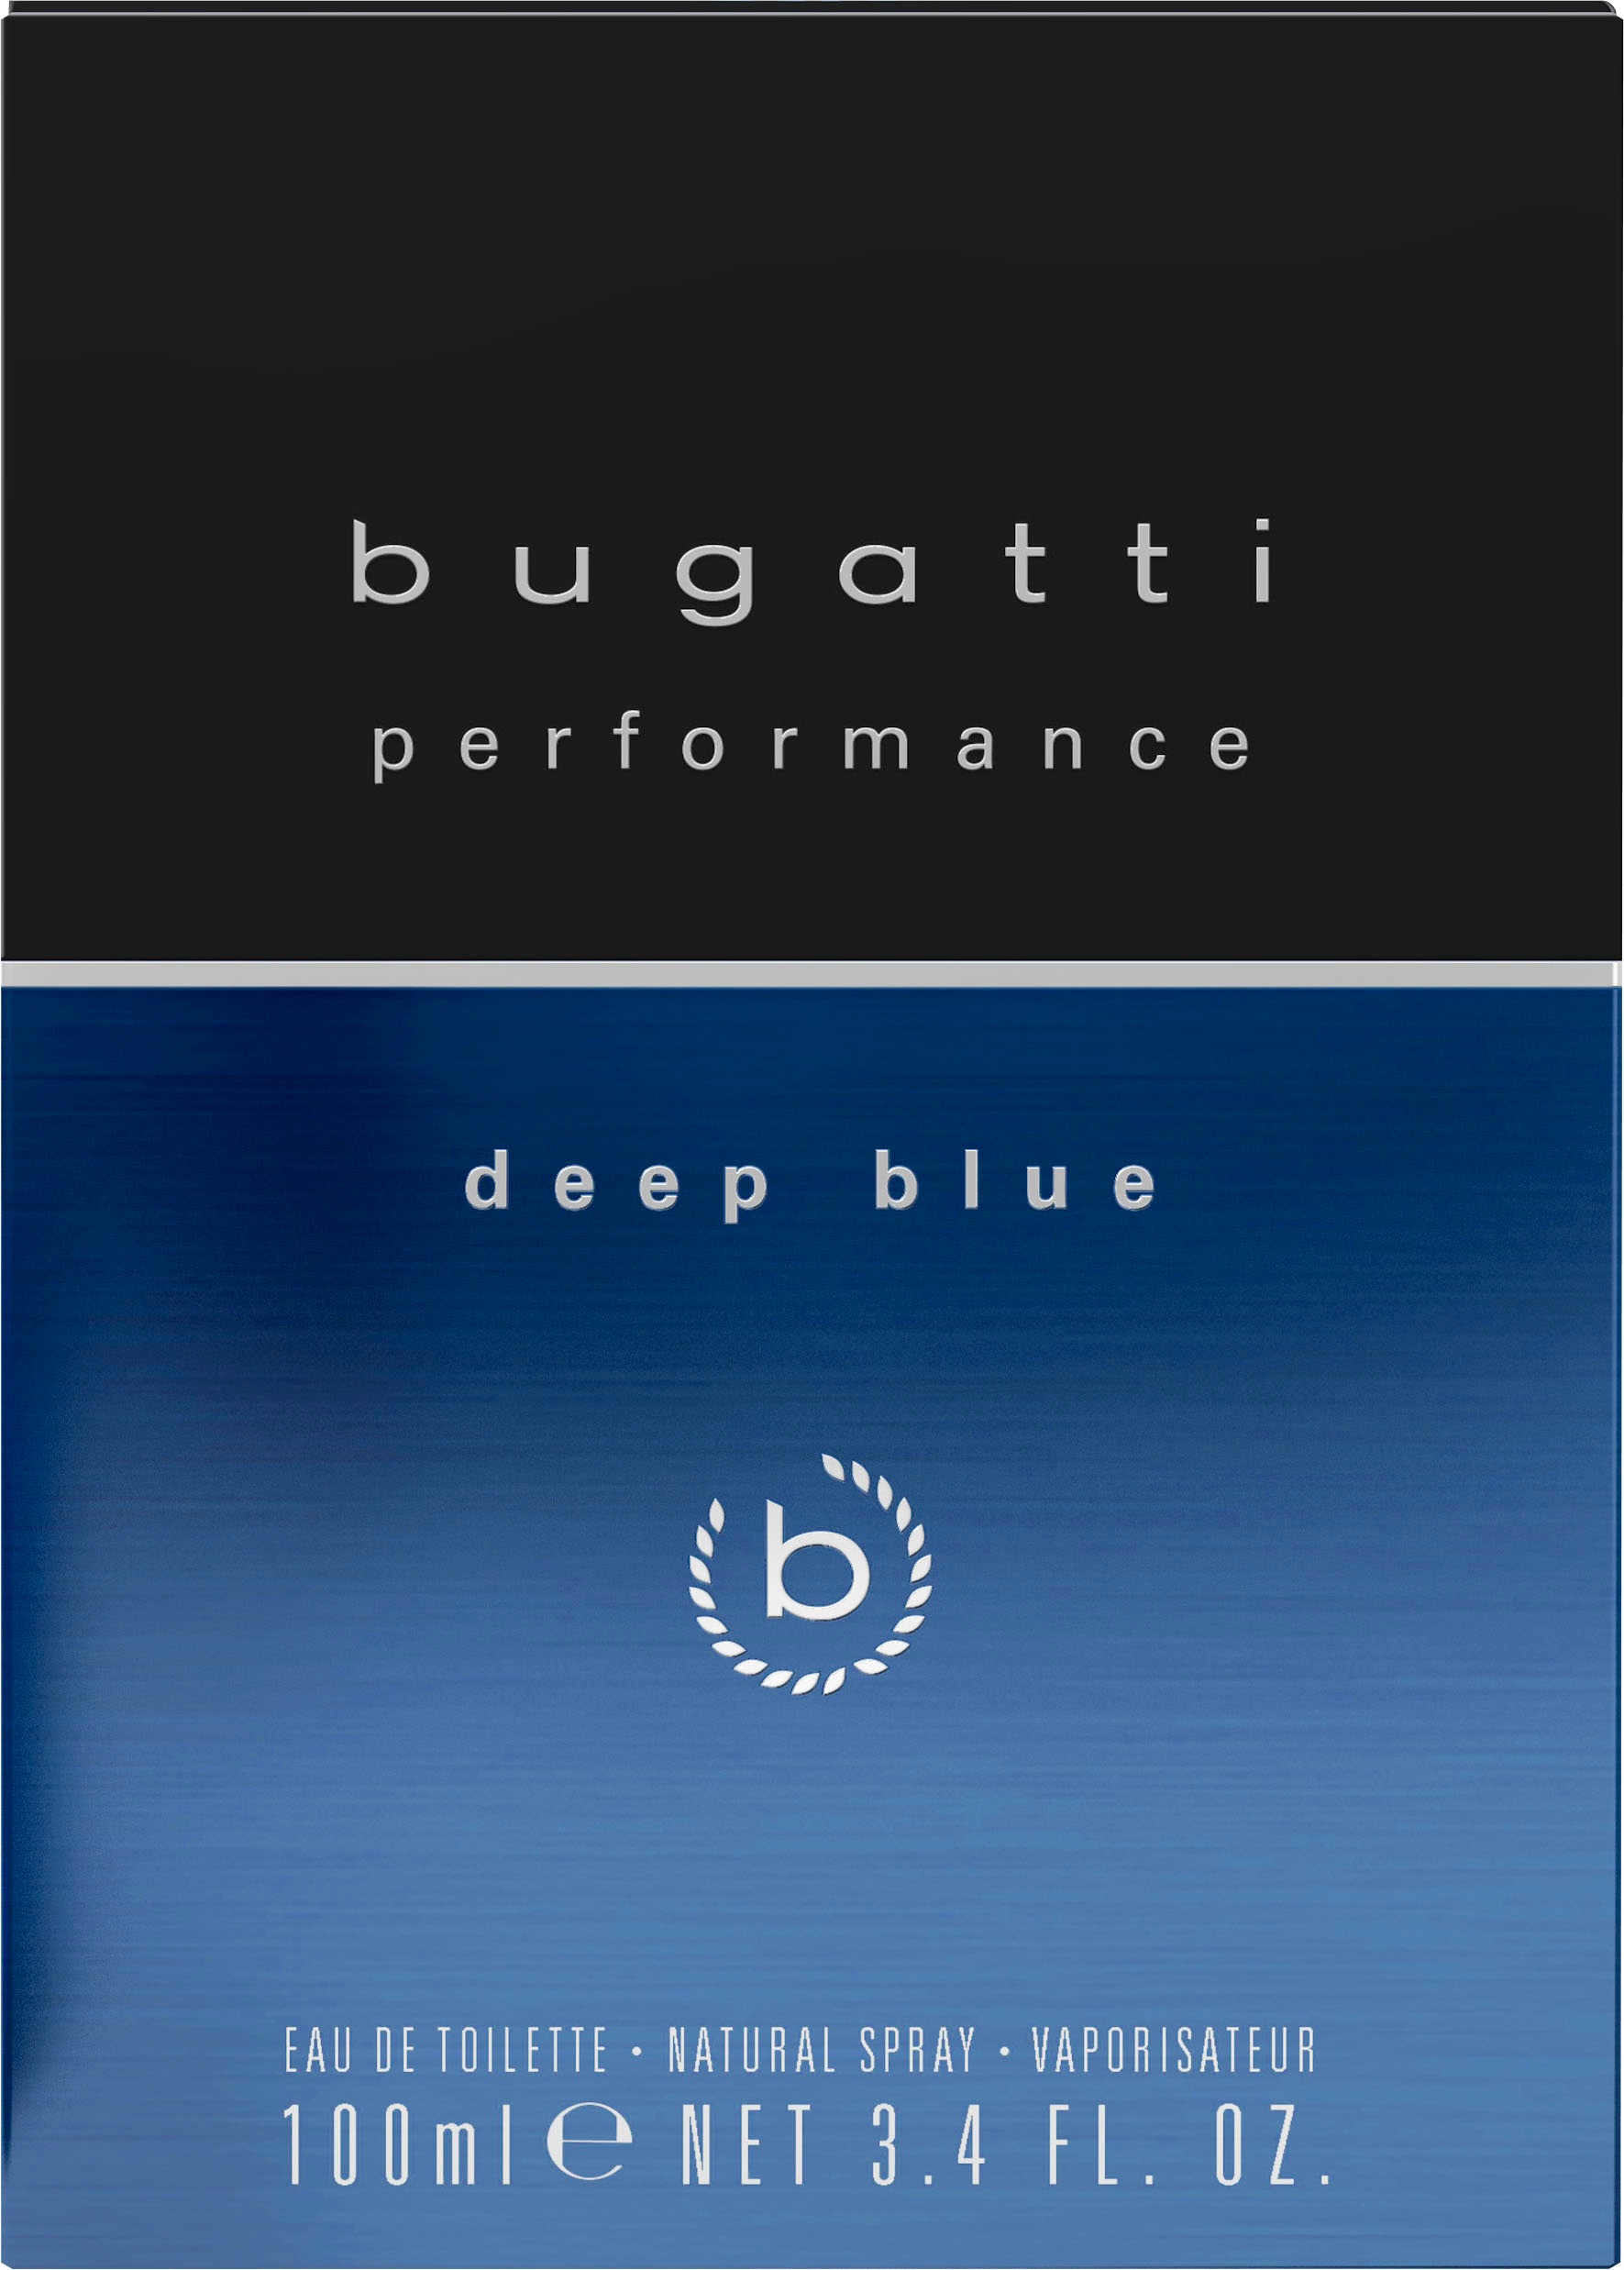 Eau Performance OTTO 100ml« Deep de »BUGATTI bugatti bestellen EdT Toilette bei Blue